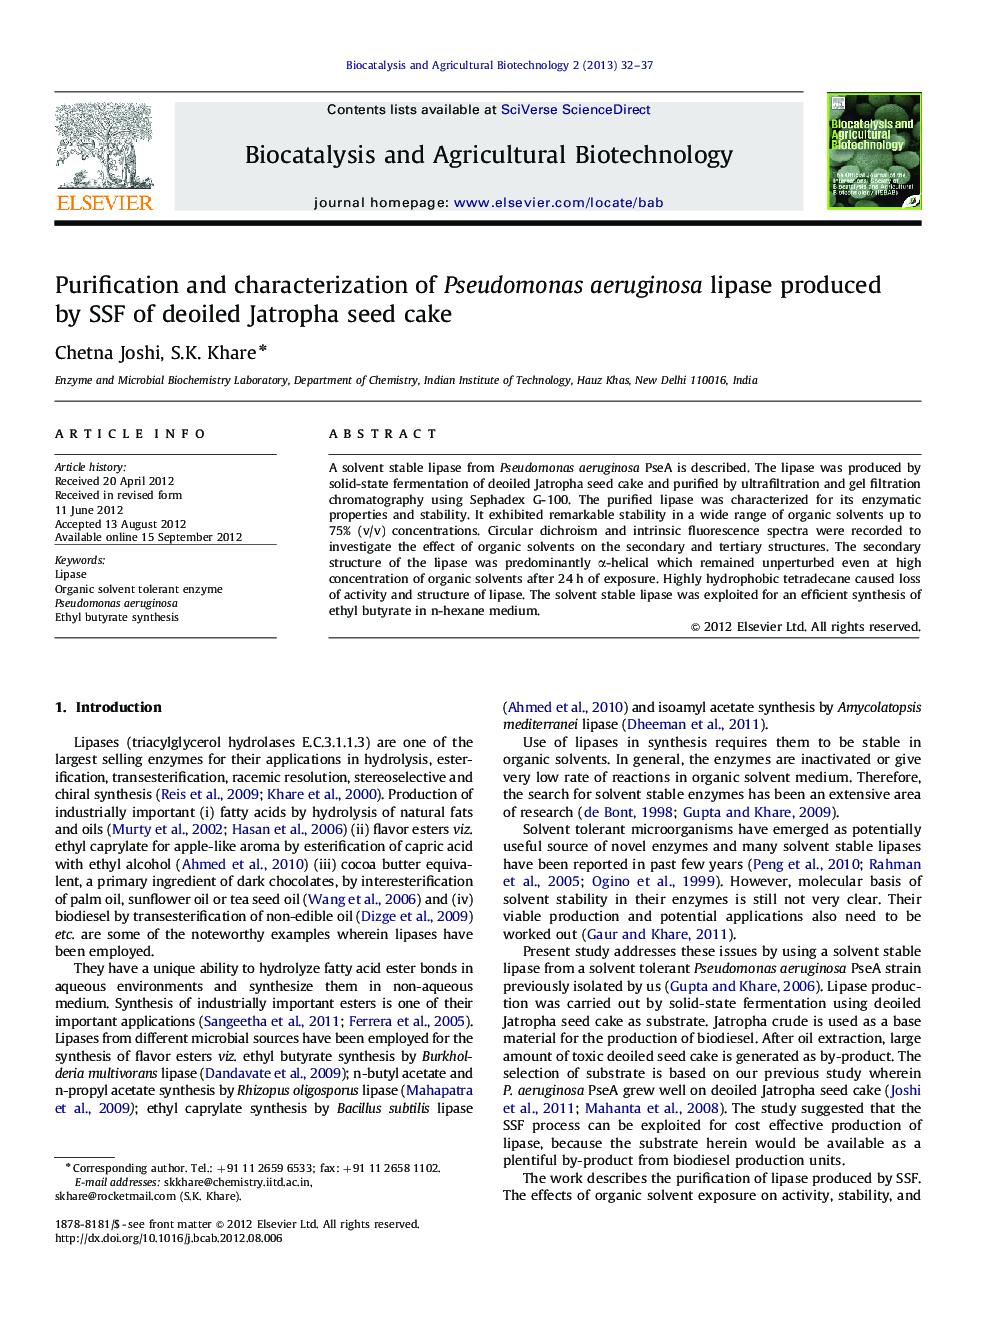 Purification and characterization of Pseudomonas aeruginosa lipase produced by SSF of deoiled Jatropha seed cake